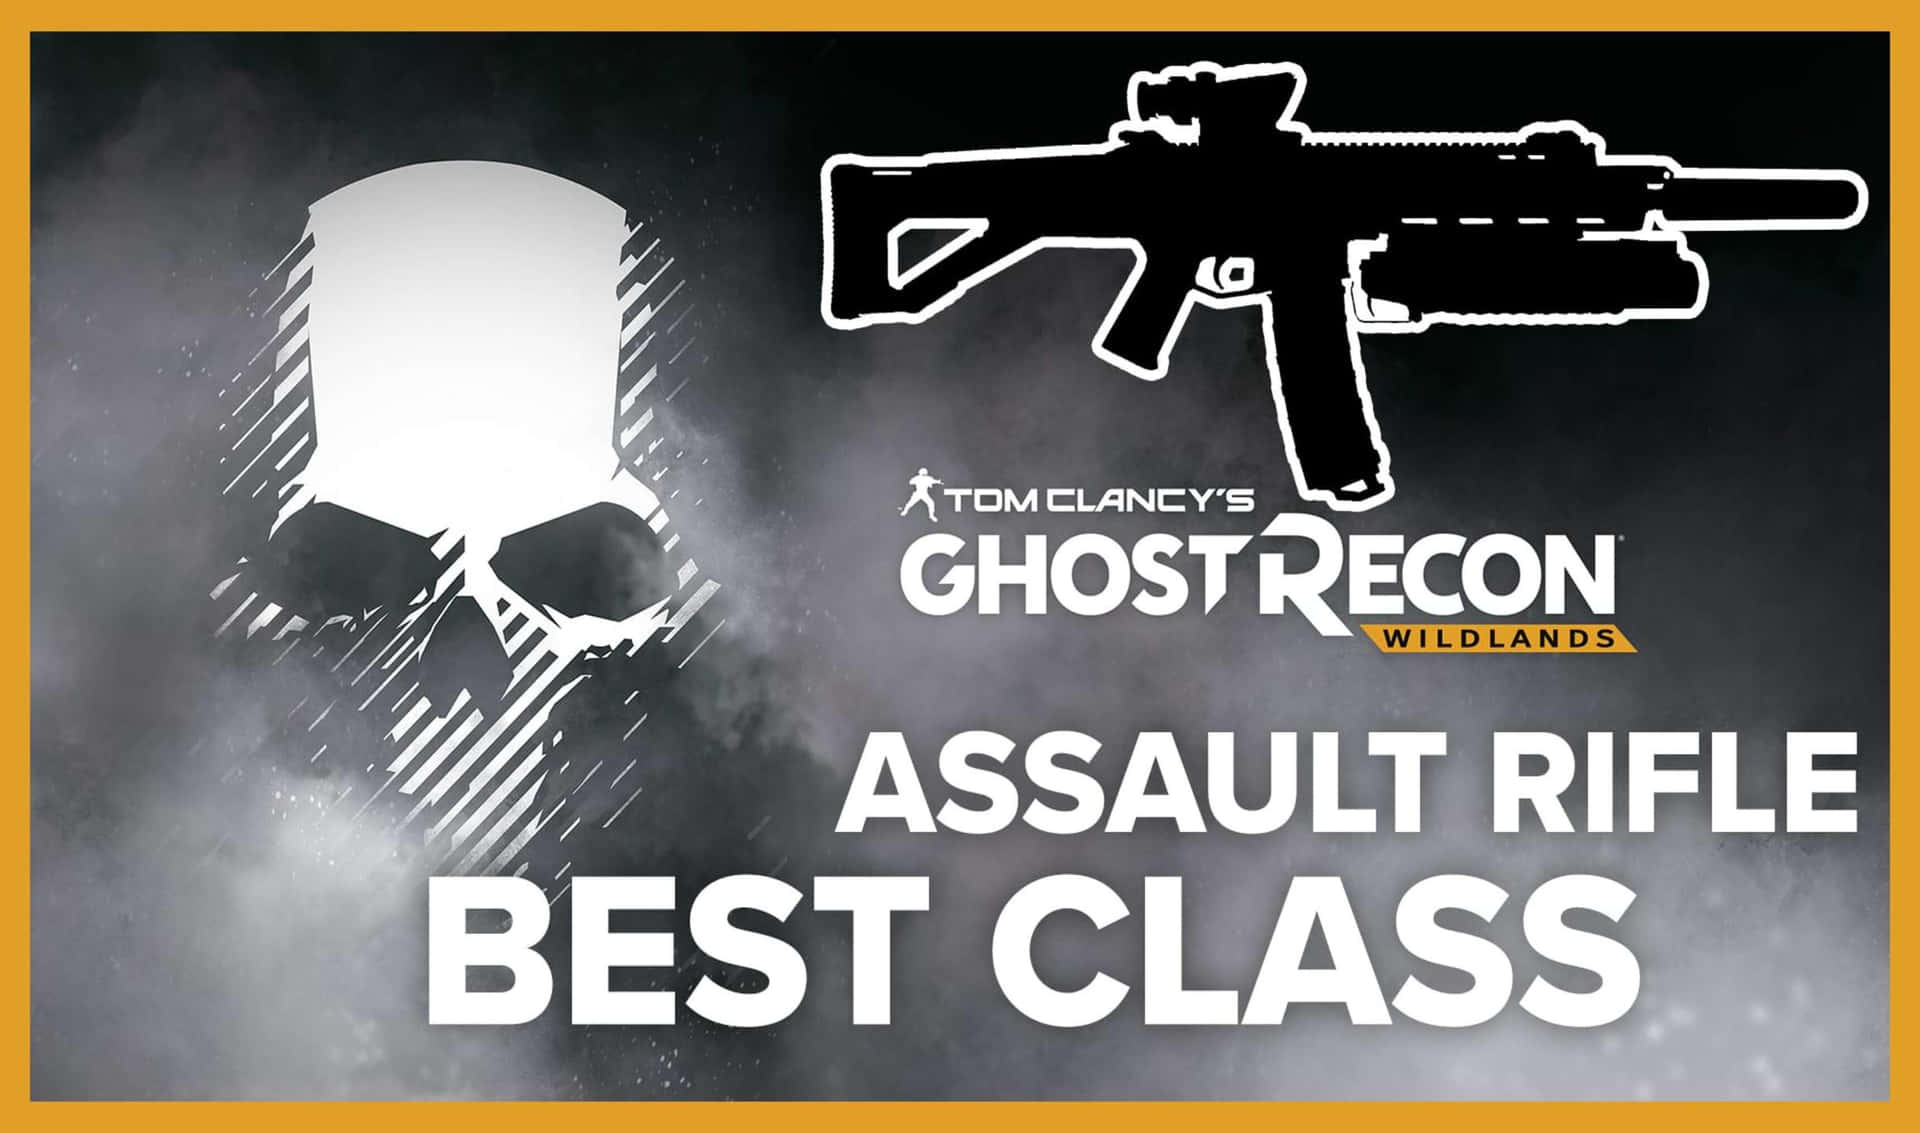 2440x1440 Ghost Recon Wildlands Assault Rifle Best Class Poster Background